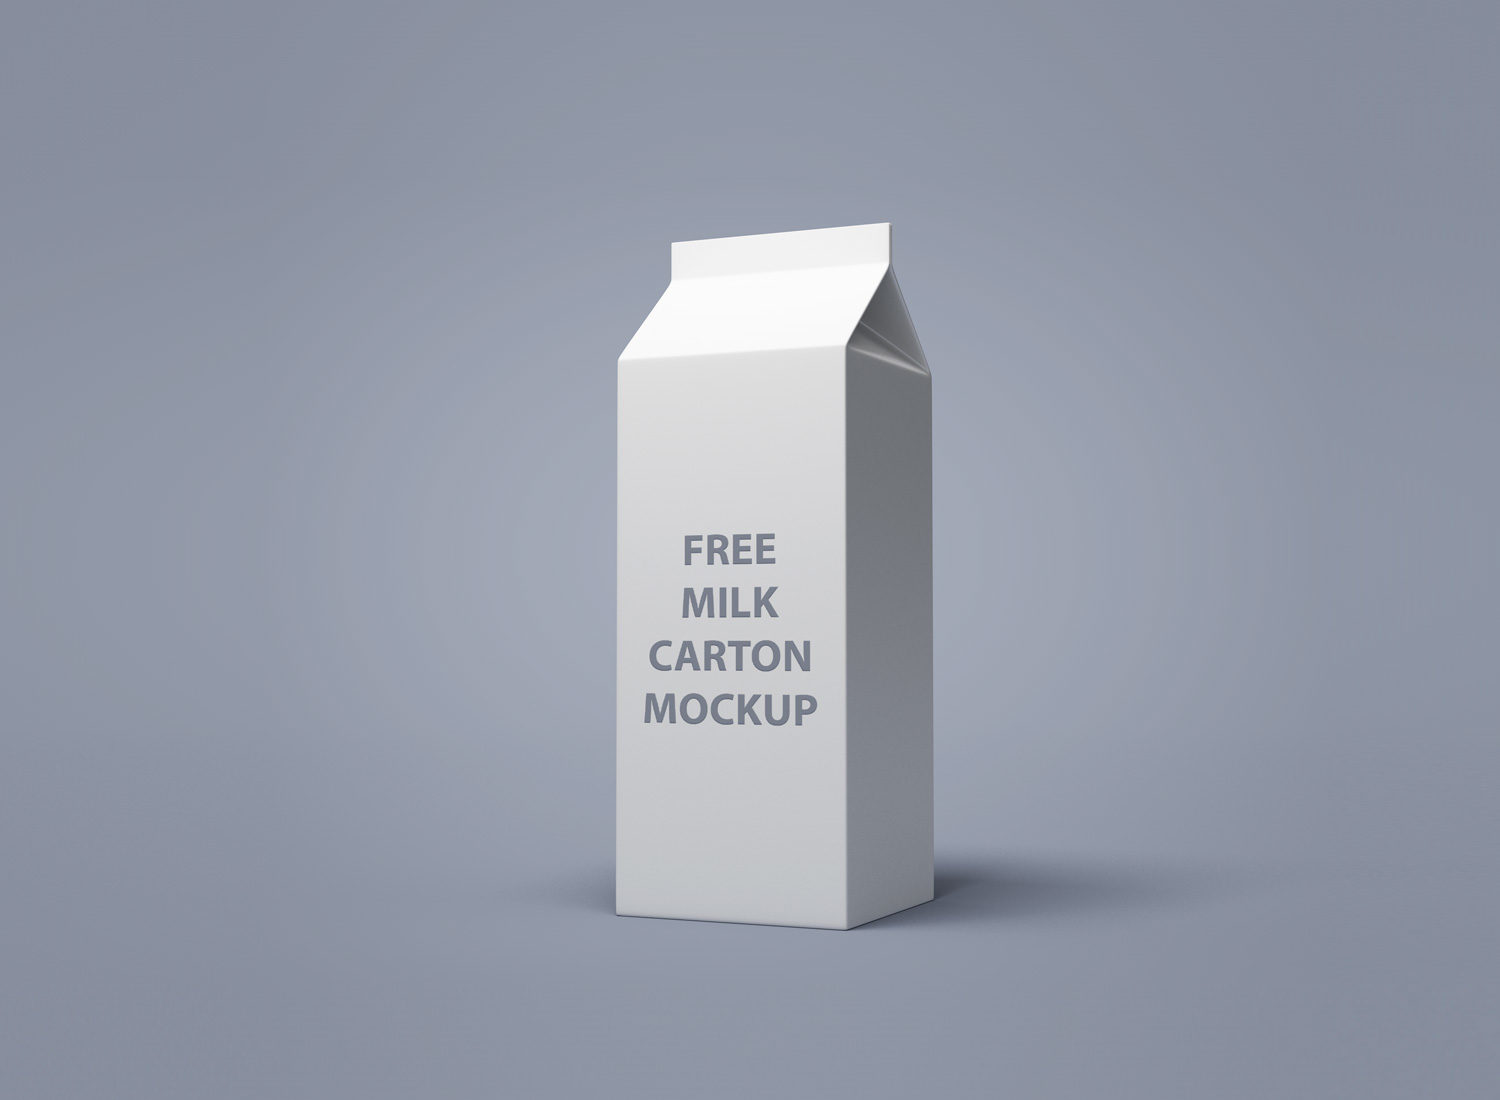 Milk carton box mockup free Idea